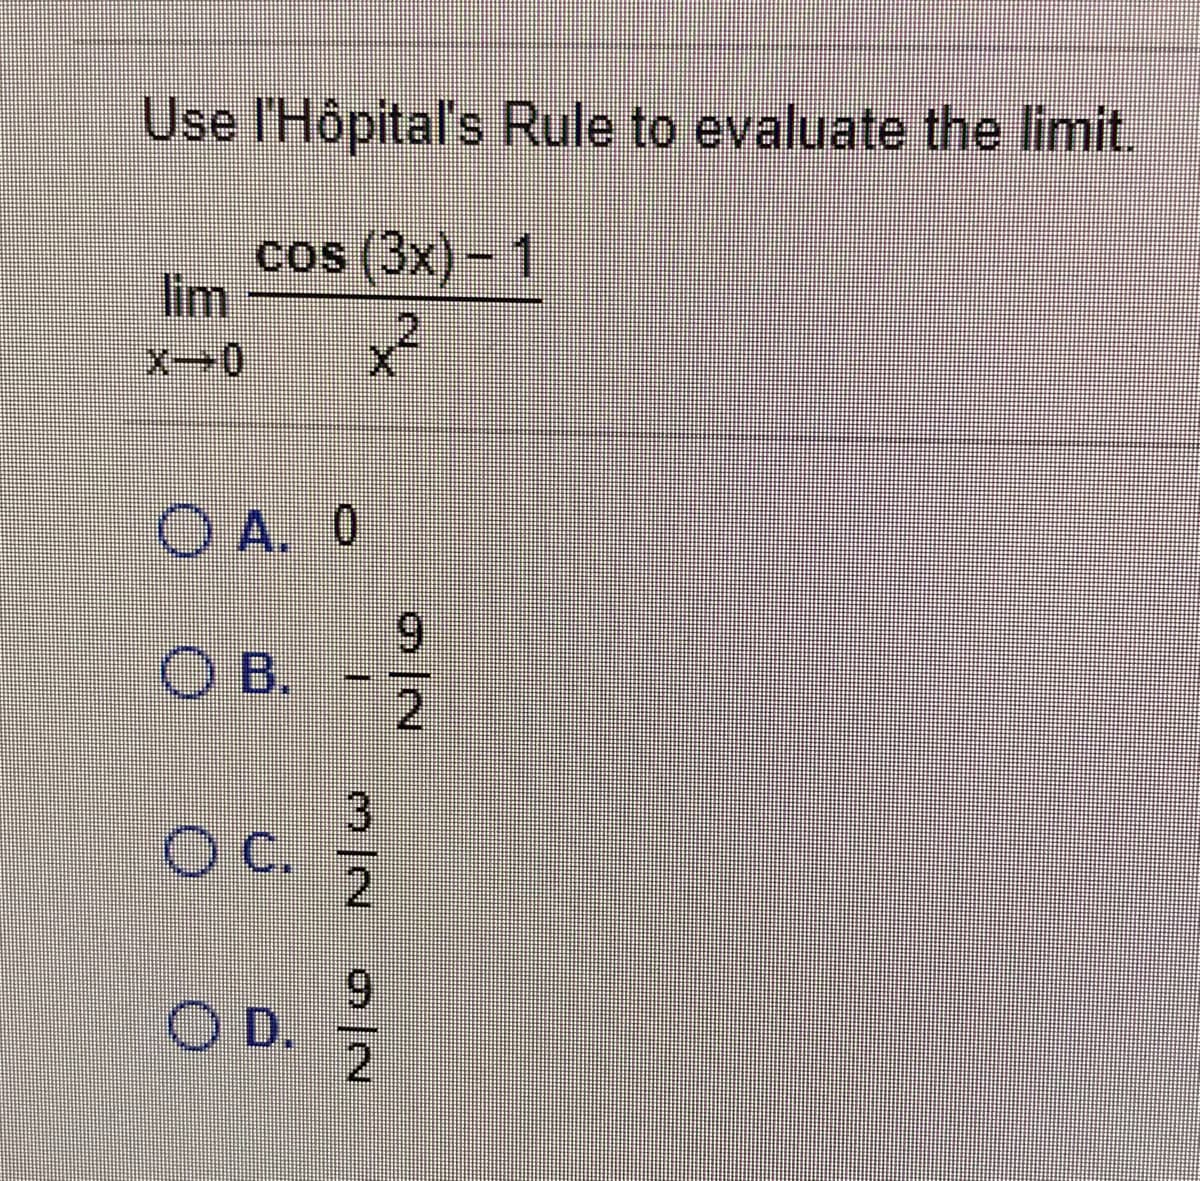 Use l'Hôpital's Rule to evaluate the limit.
cos (3x)- 1
lim
x²
O A. 0
6.
OB.
3.
Oc.
2.
6.
O D.
2.
